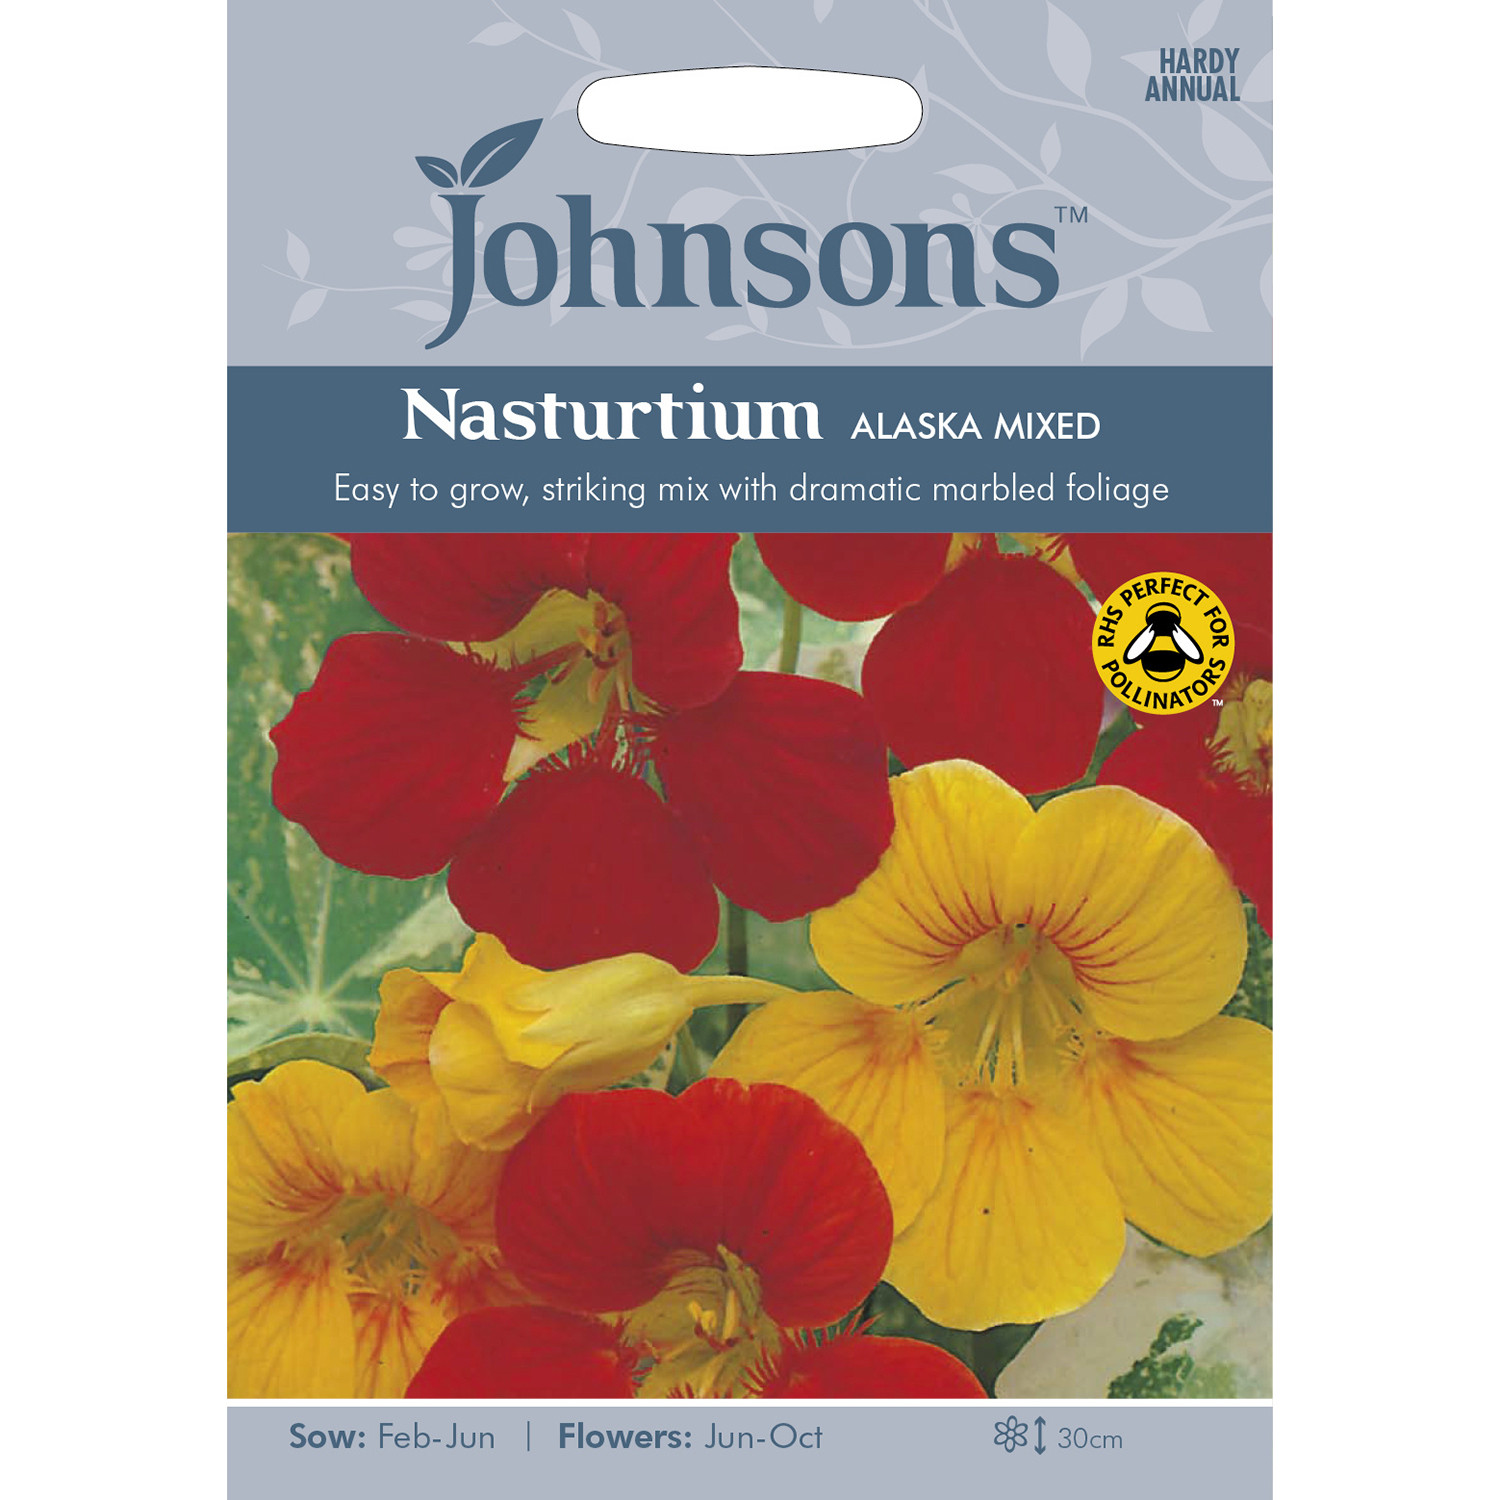 Johnsons Nasturtium Alaska Mixed Flower Seeds Image 2